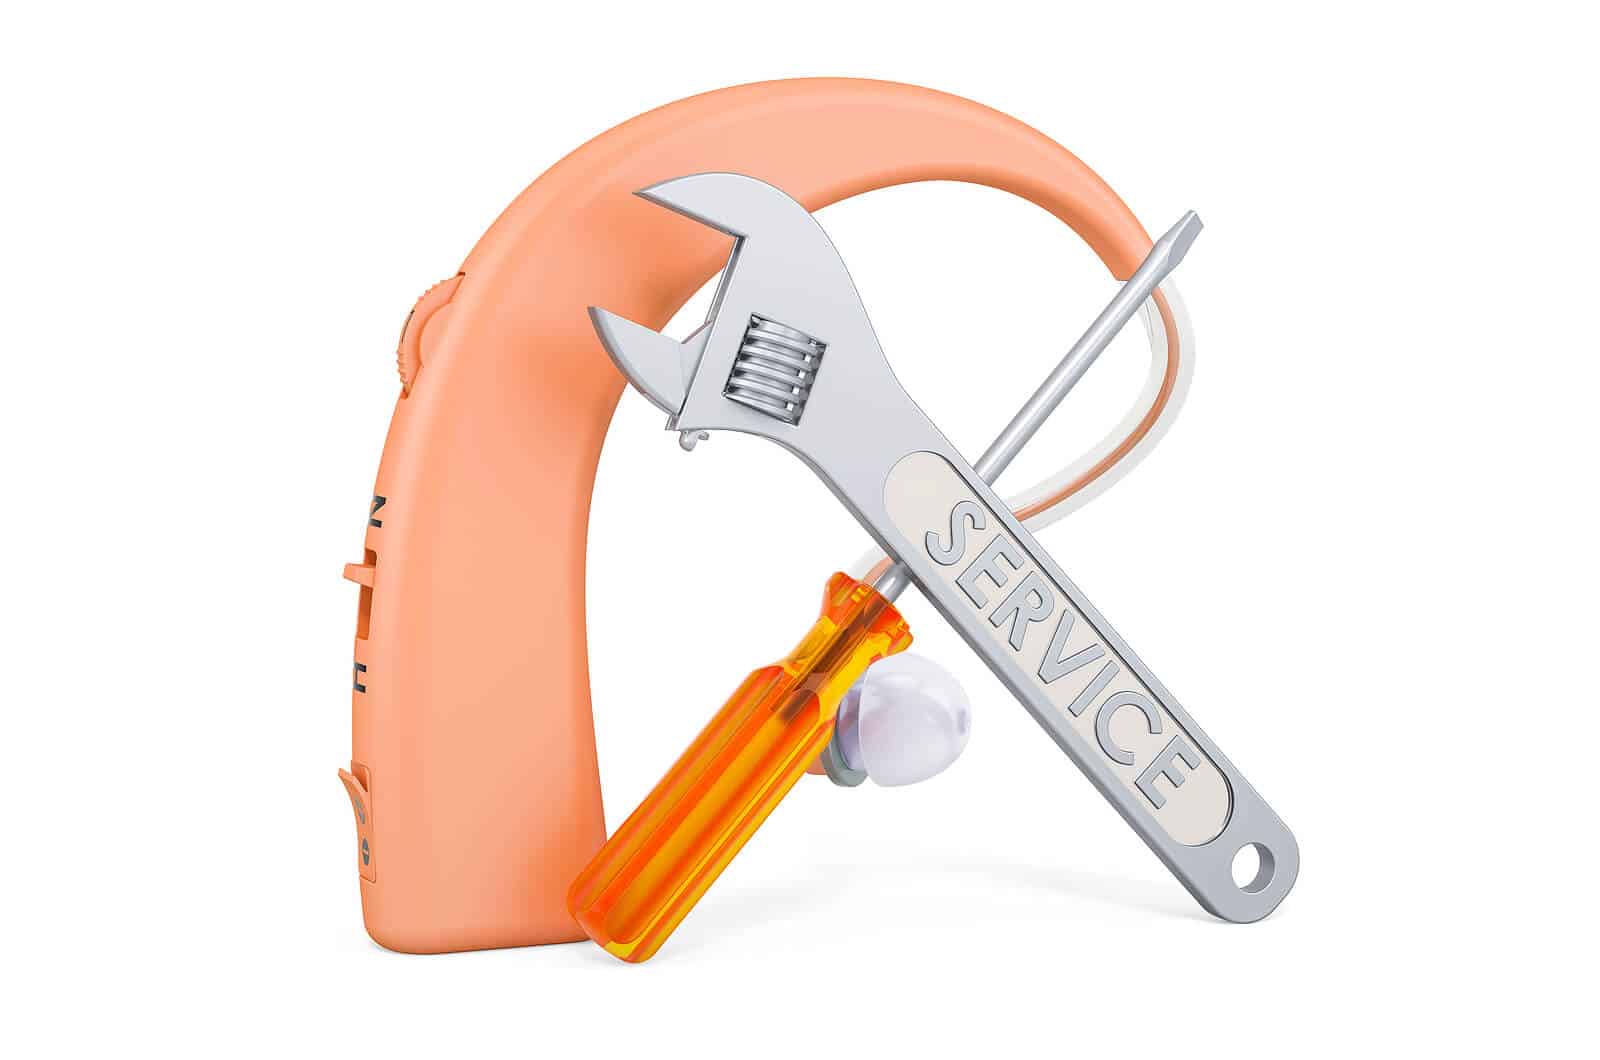 Hearing aid repair tools over orange hearing aid